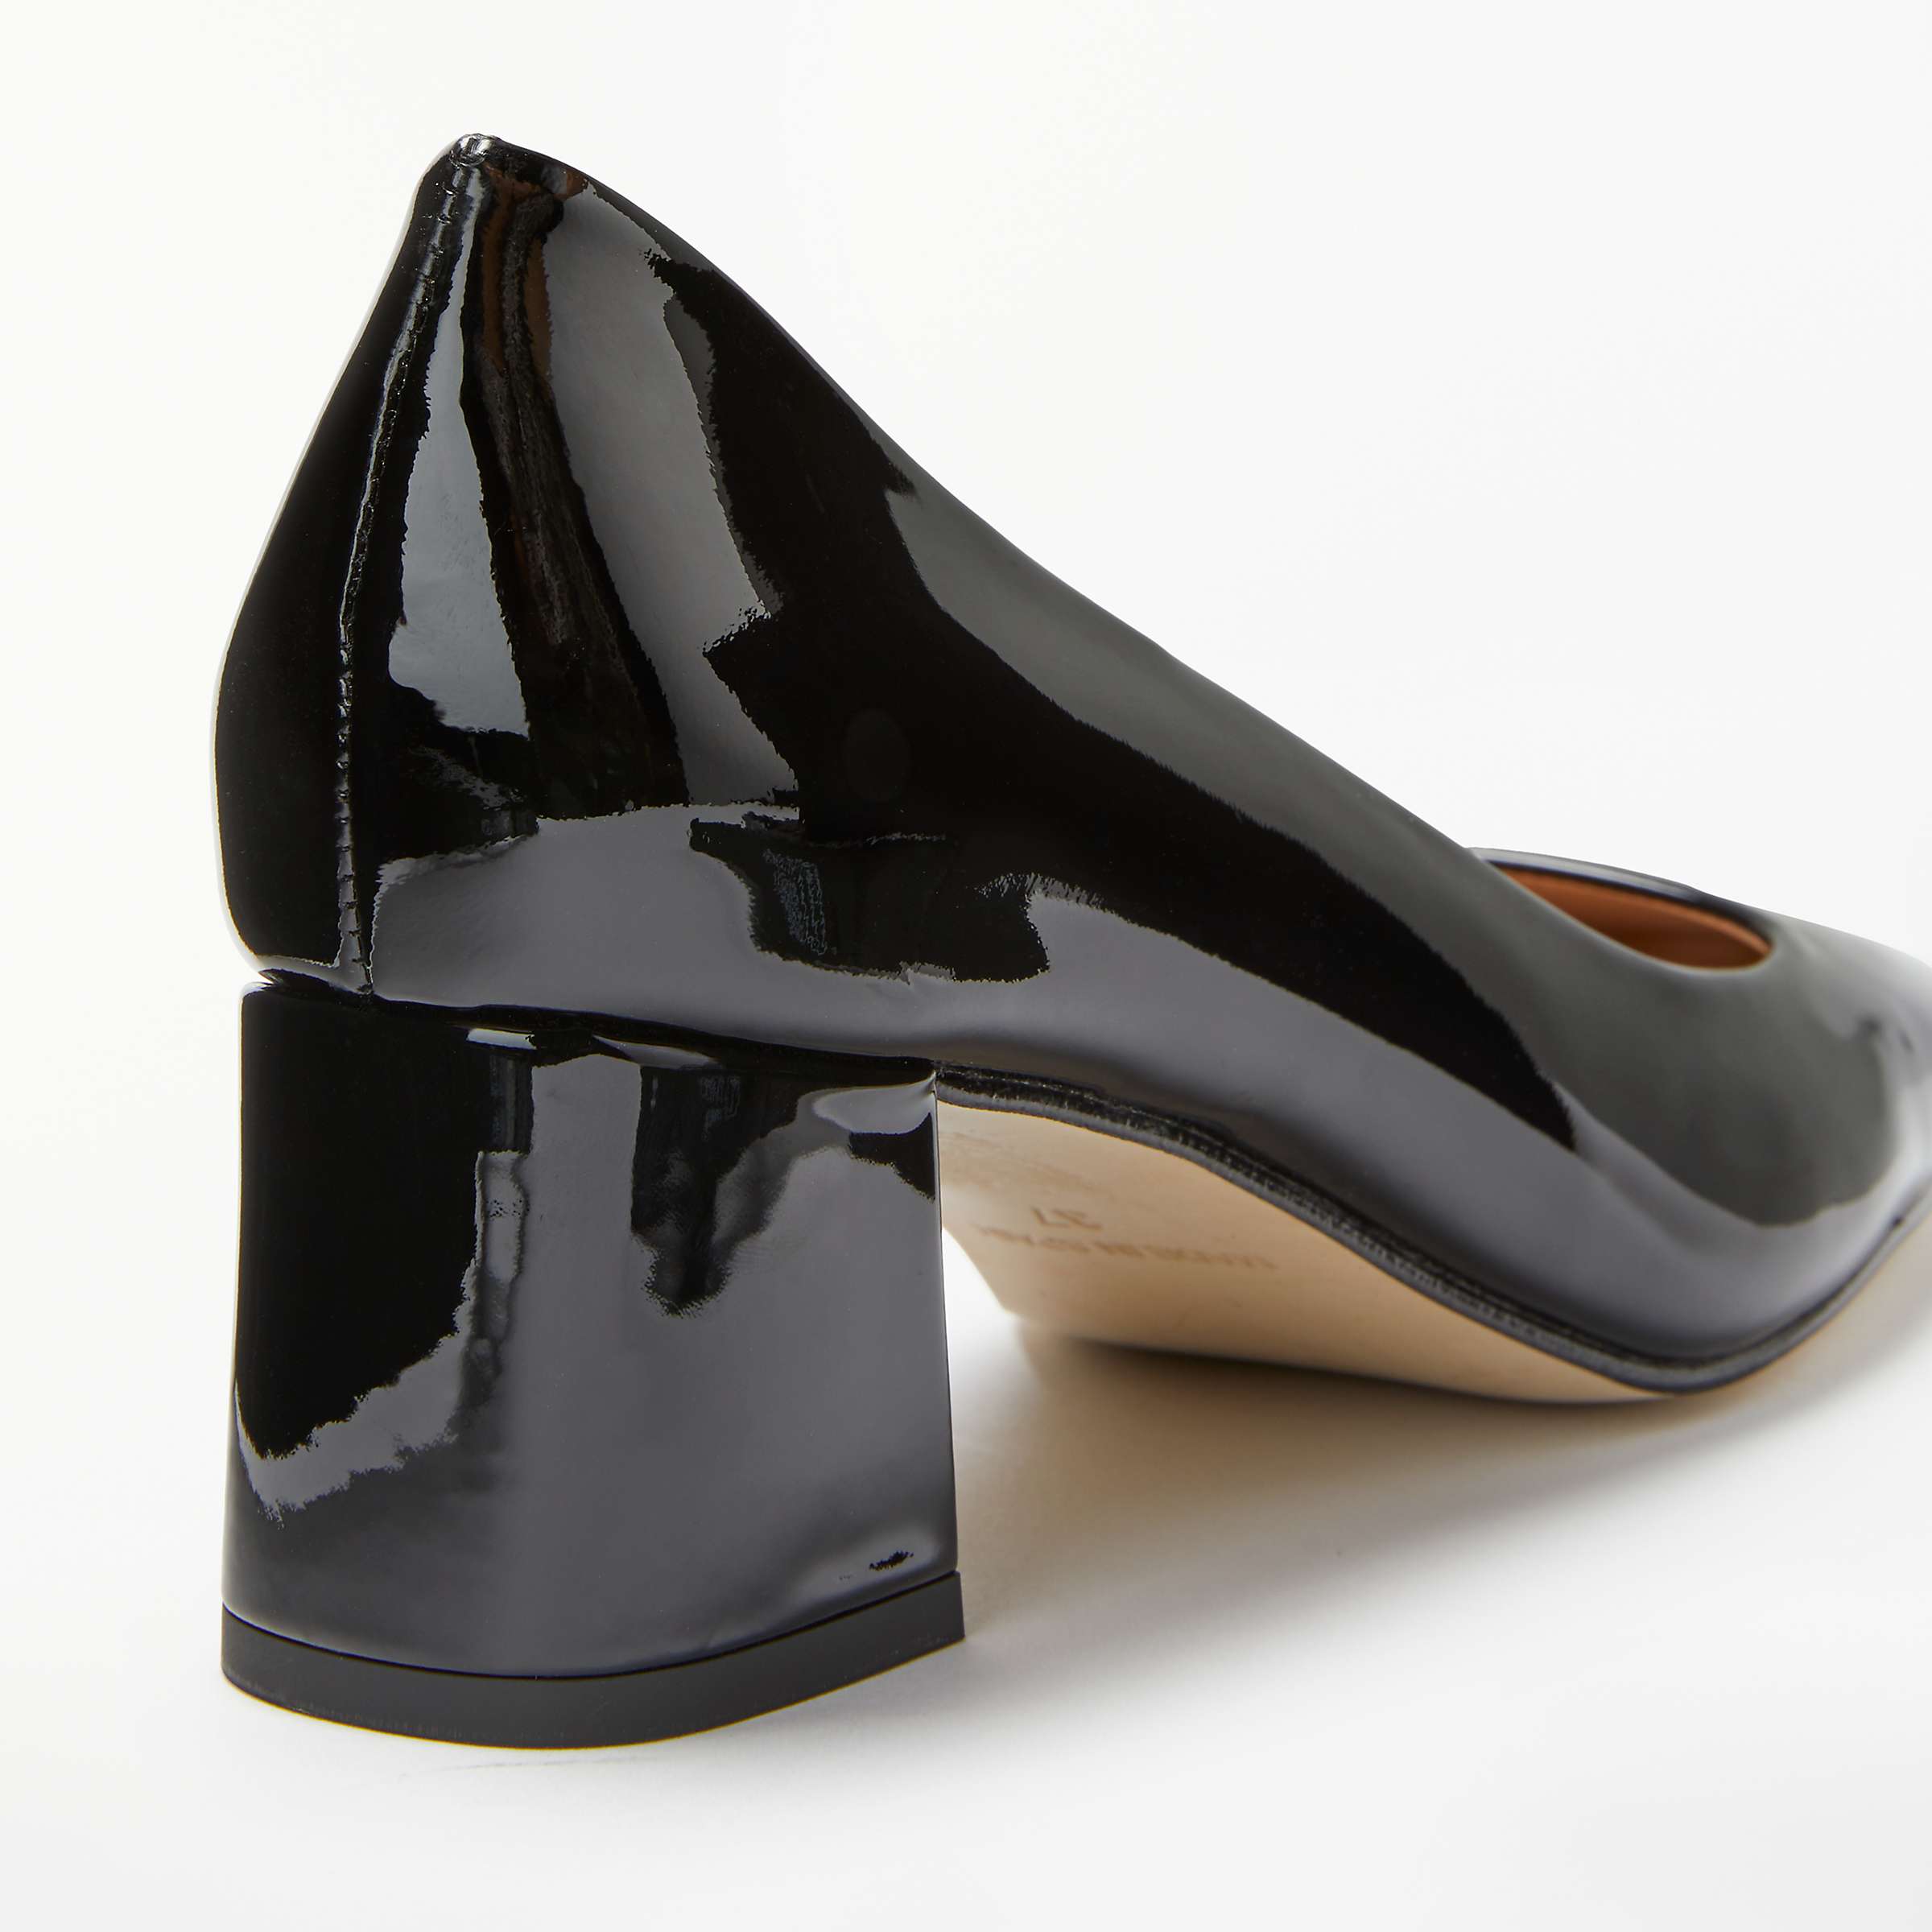 Buy John Lewis Amanda Patent Leather Court Shoes Online at johnlewis.com